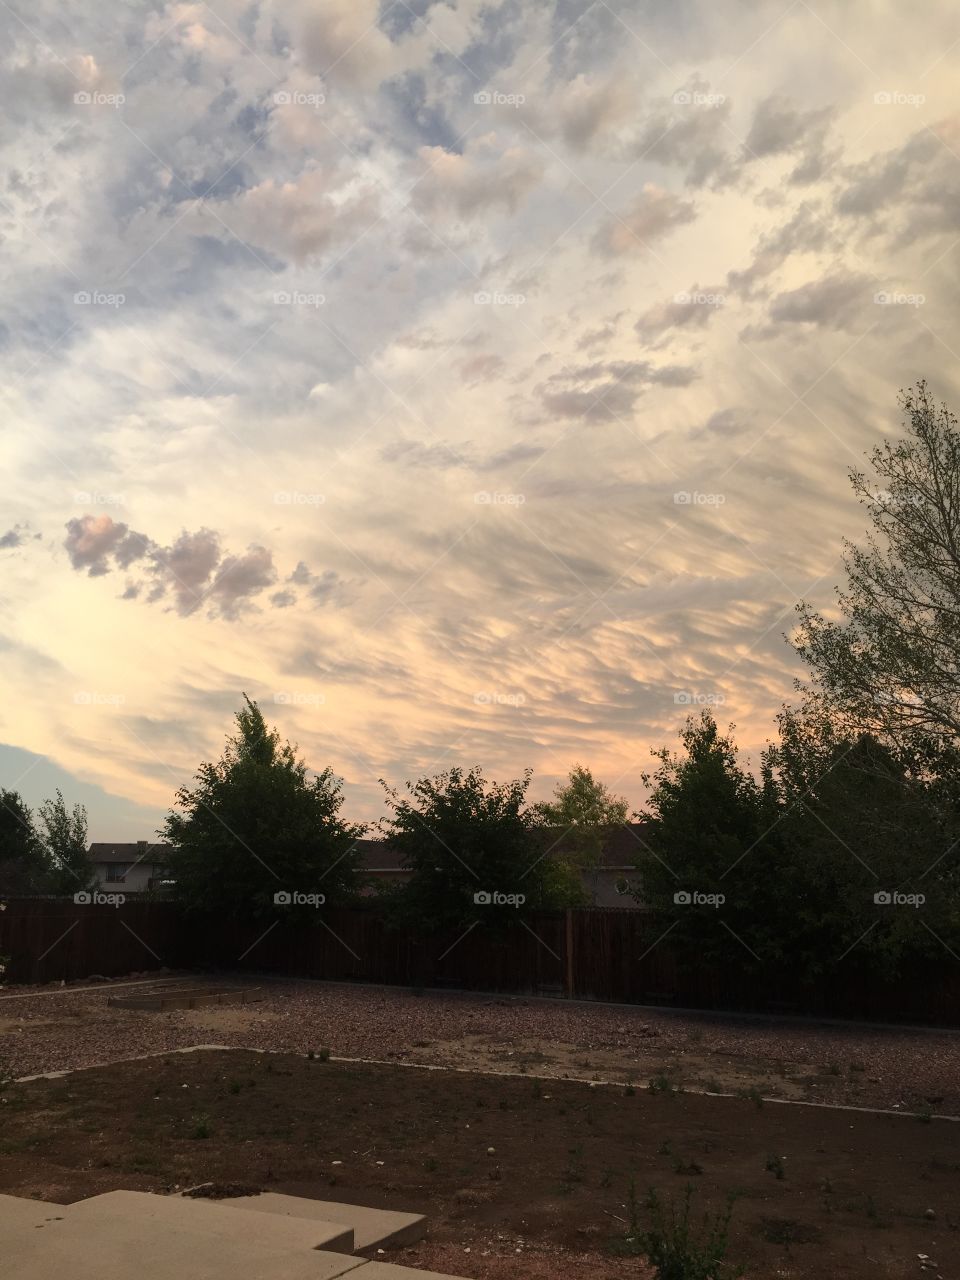 Sky after a rain storm
